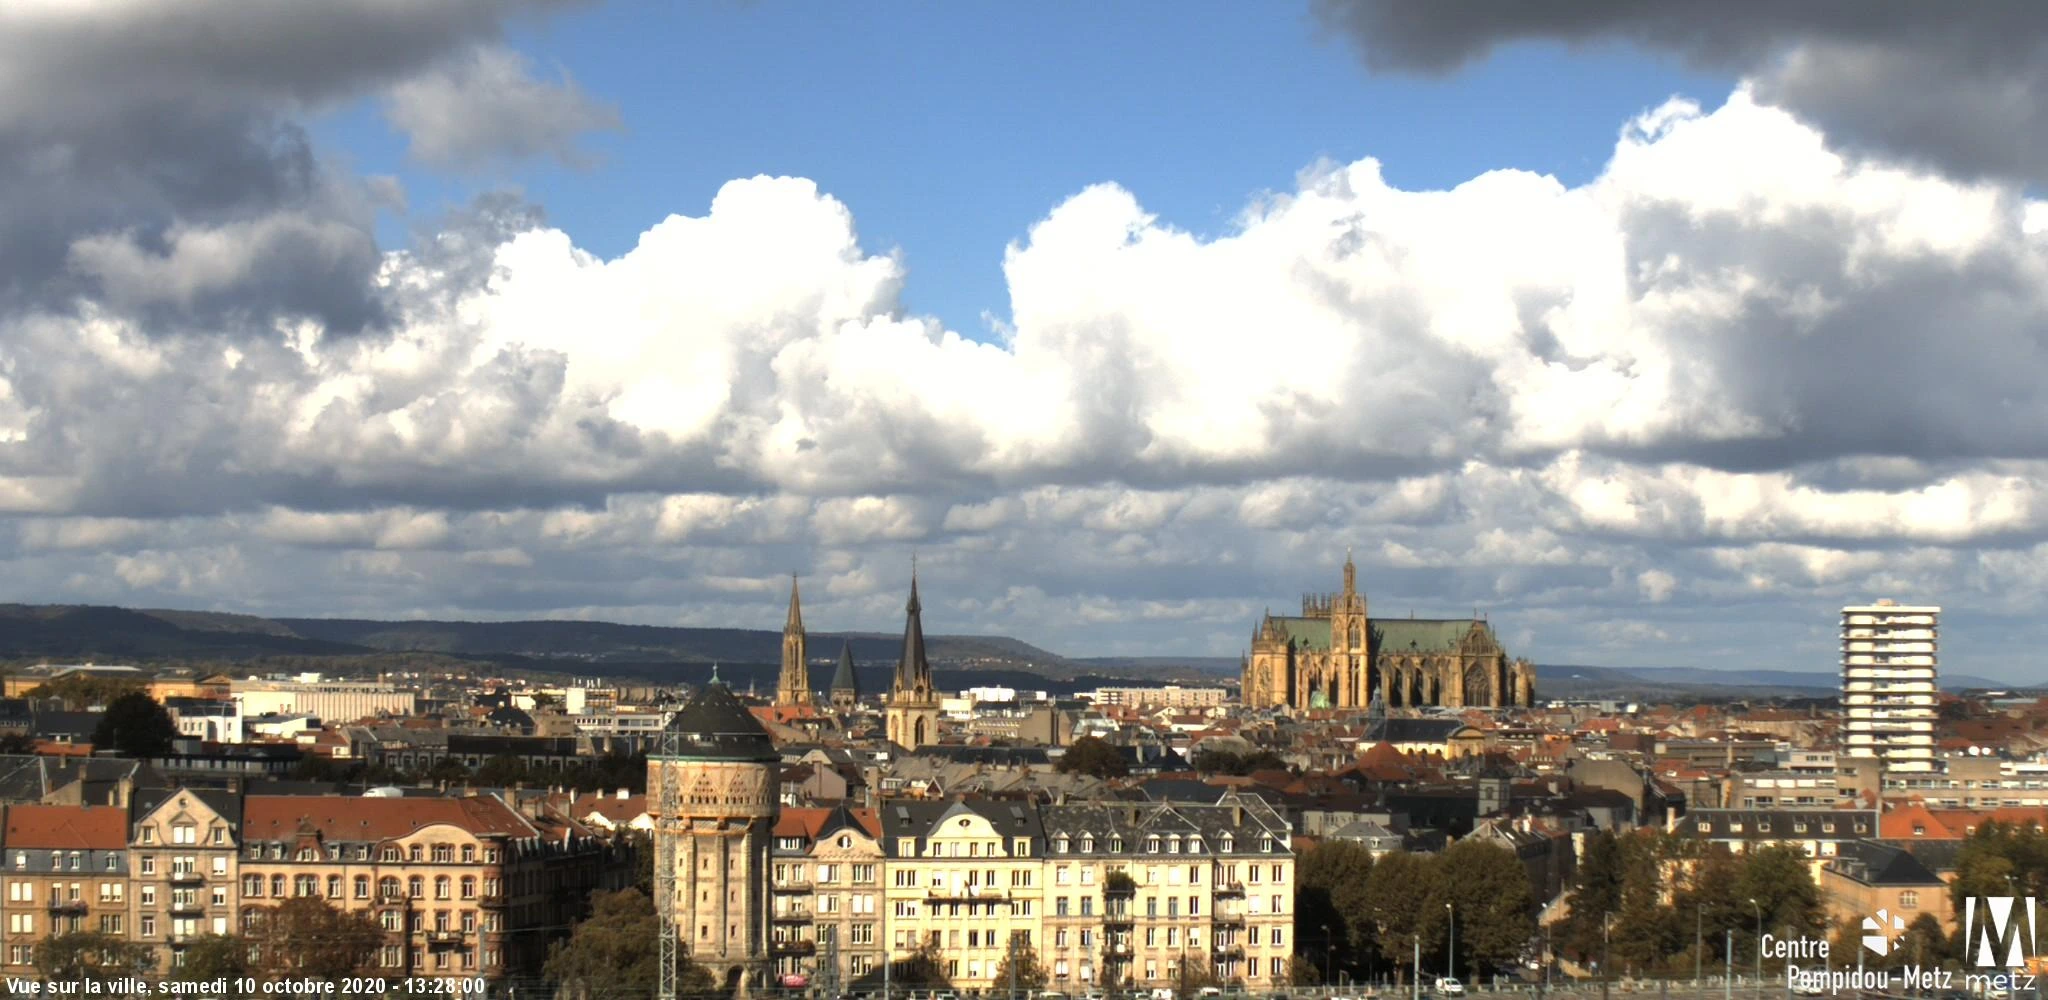 Cathedral of Saint-Etienne, Metz